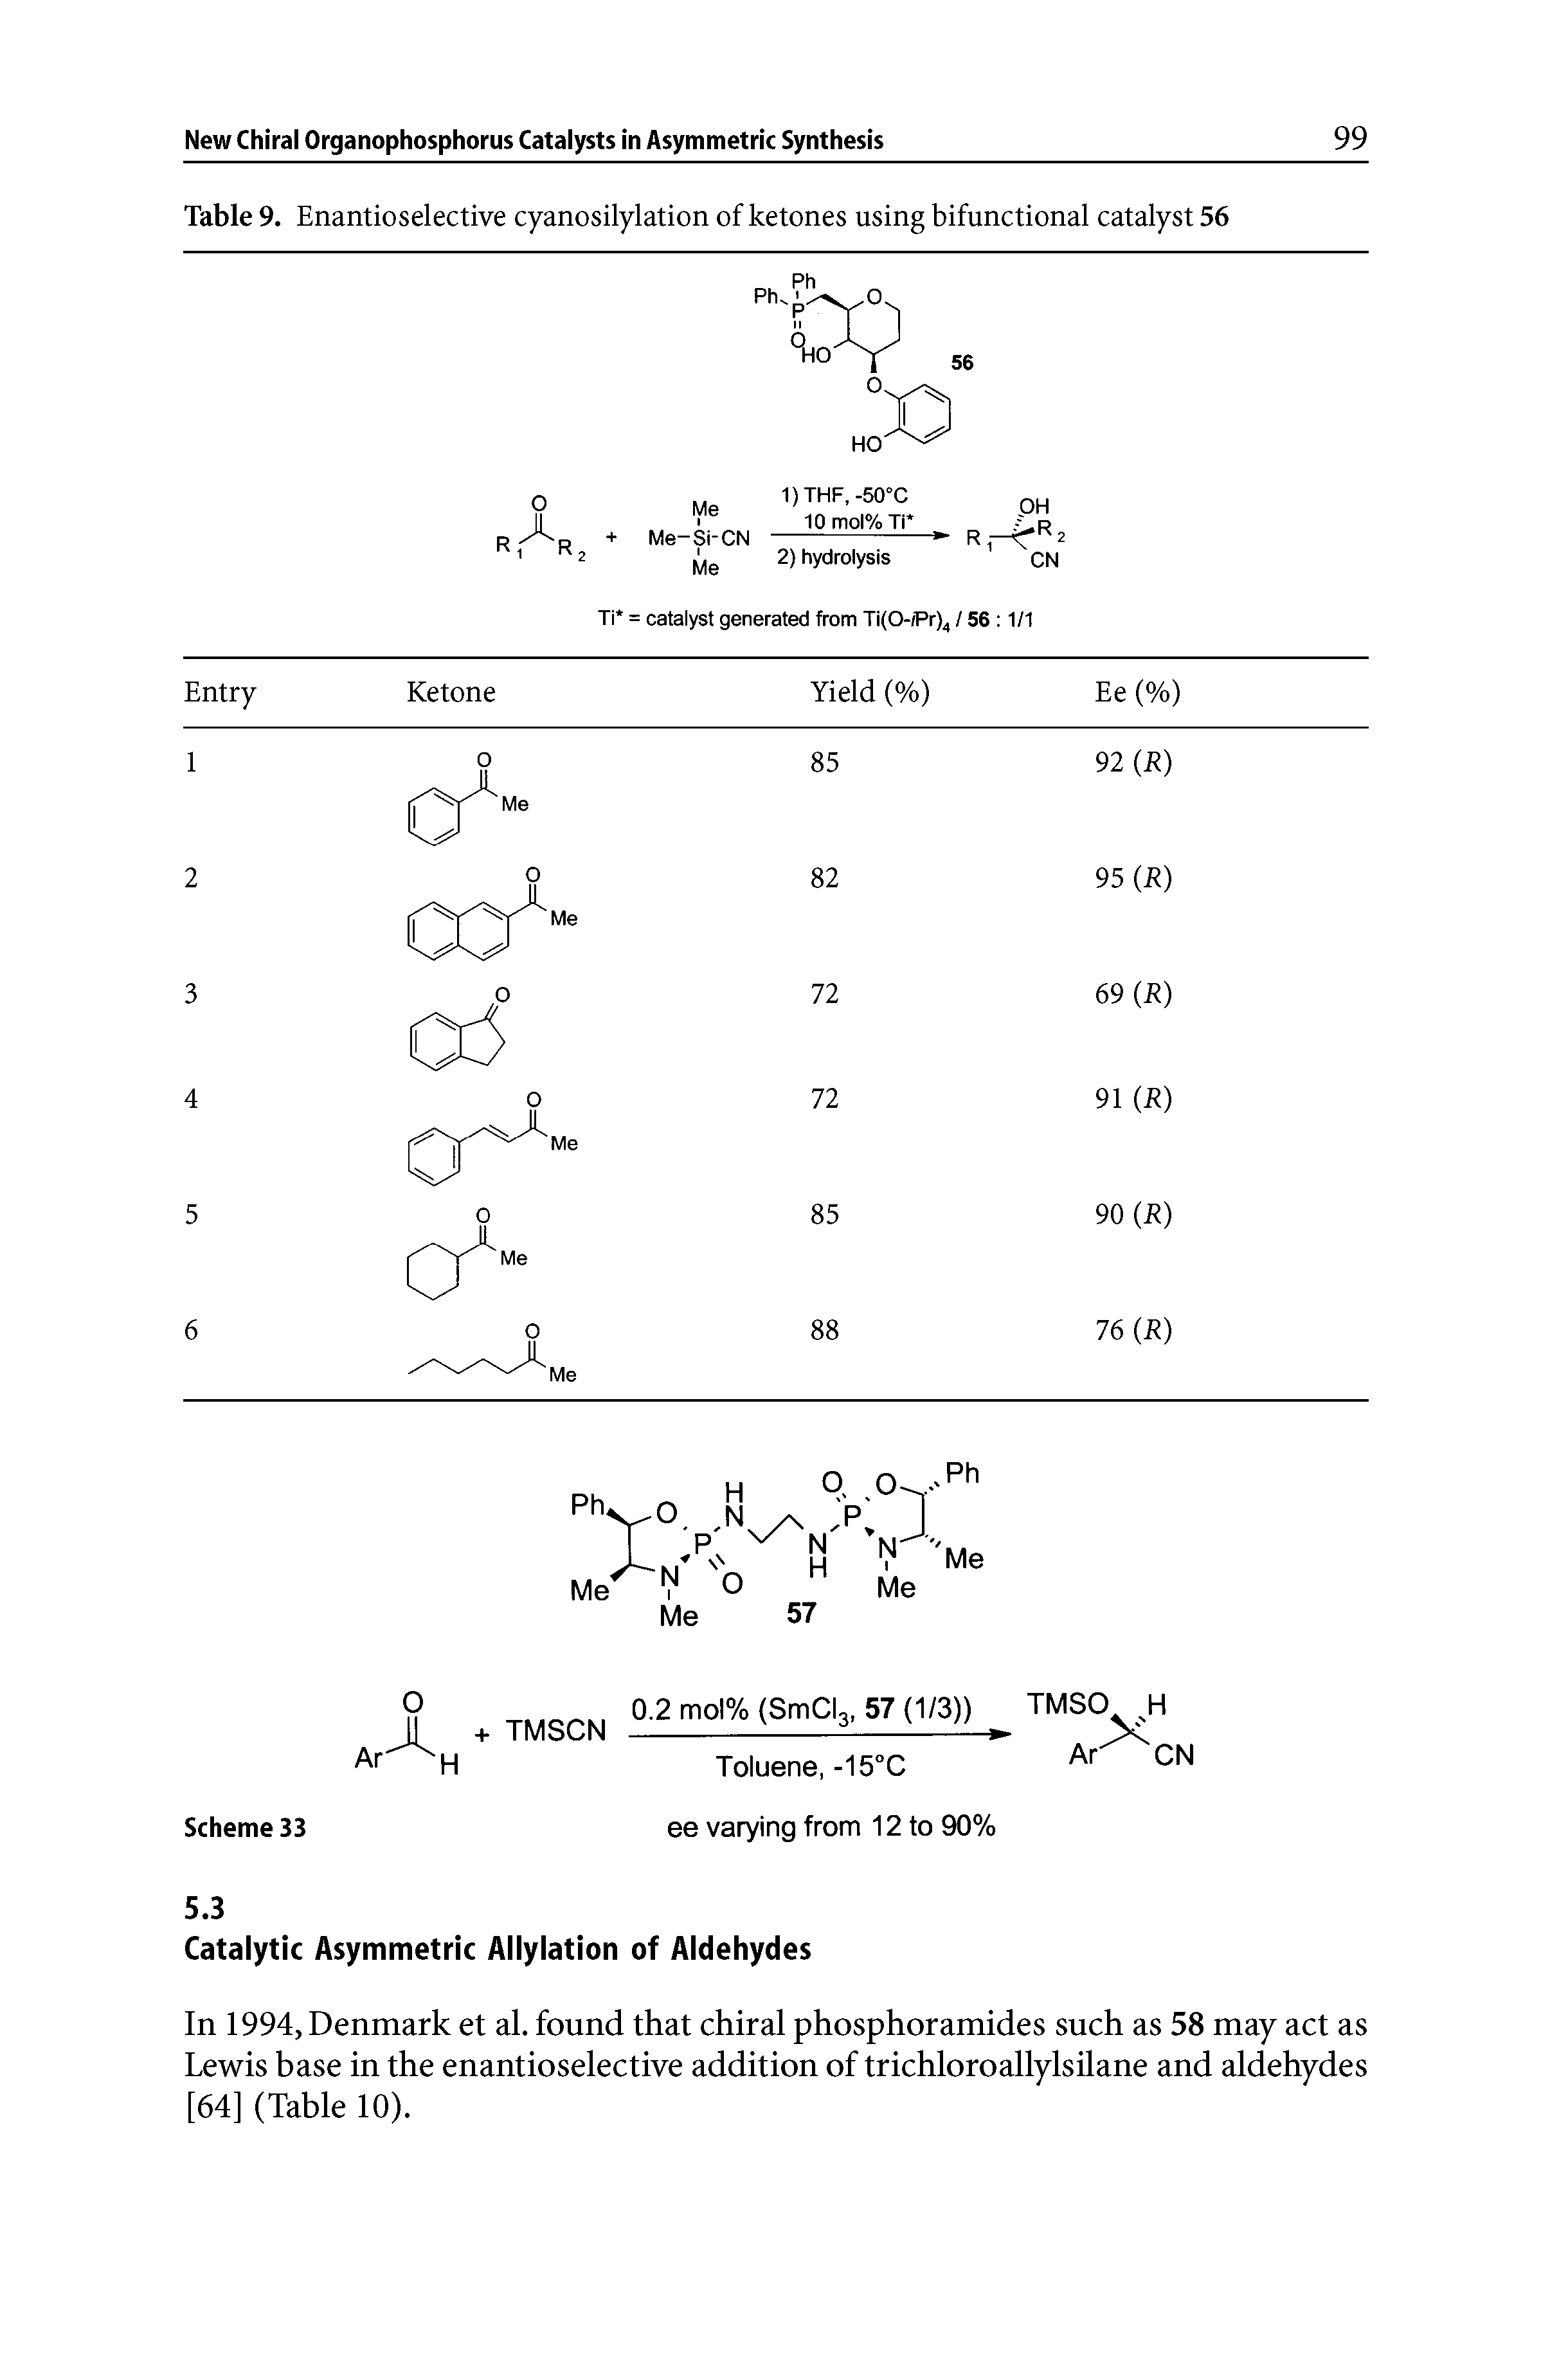 Table 9. Enantioselective cyanosilylation of ketones using bifunctional catalyst 56...